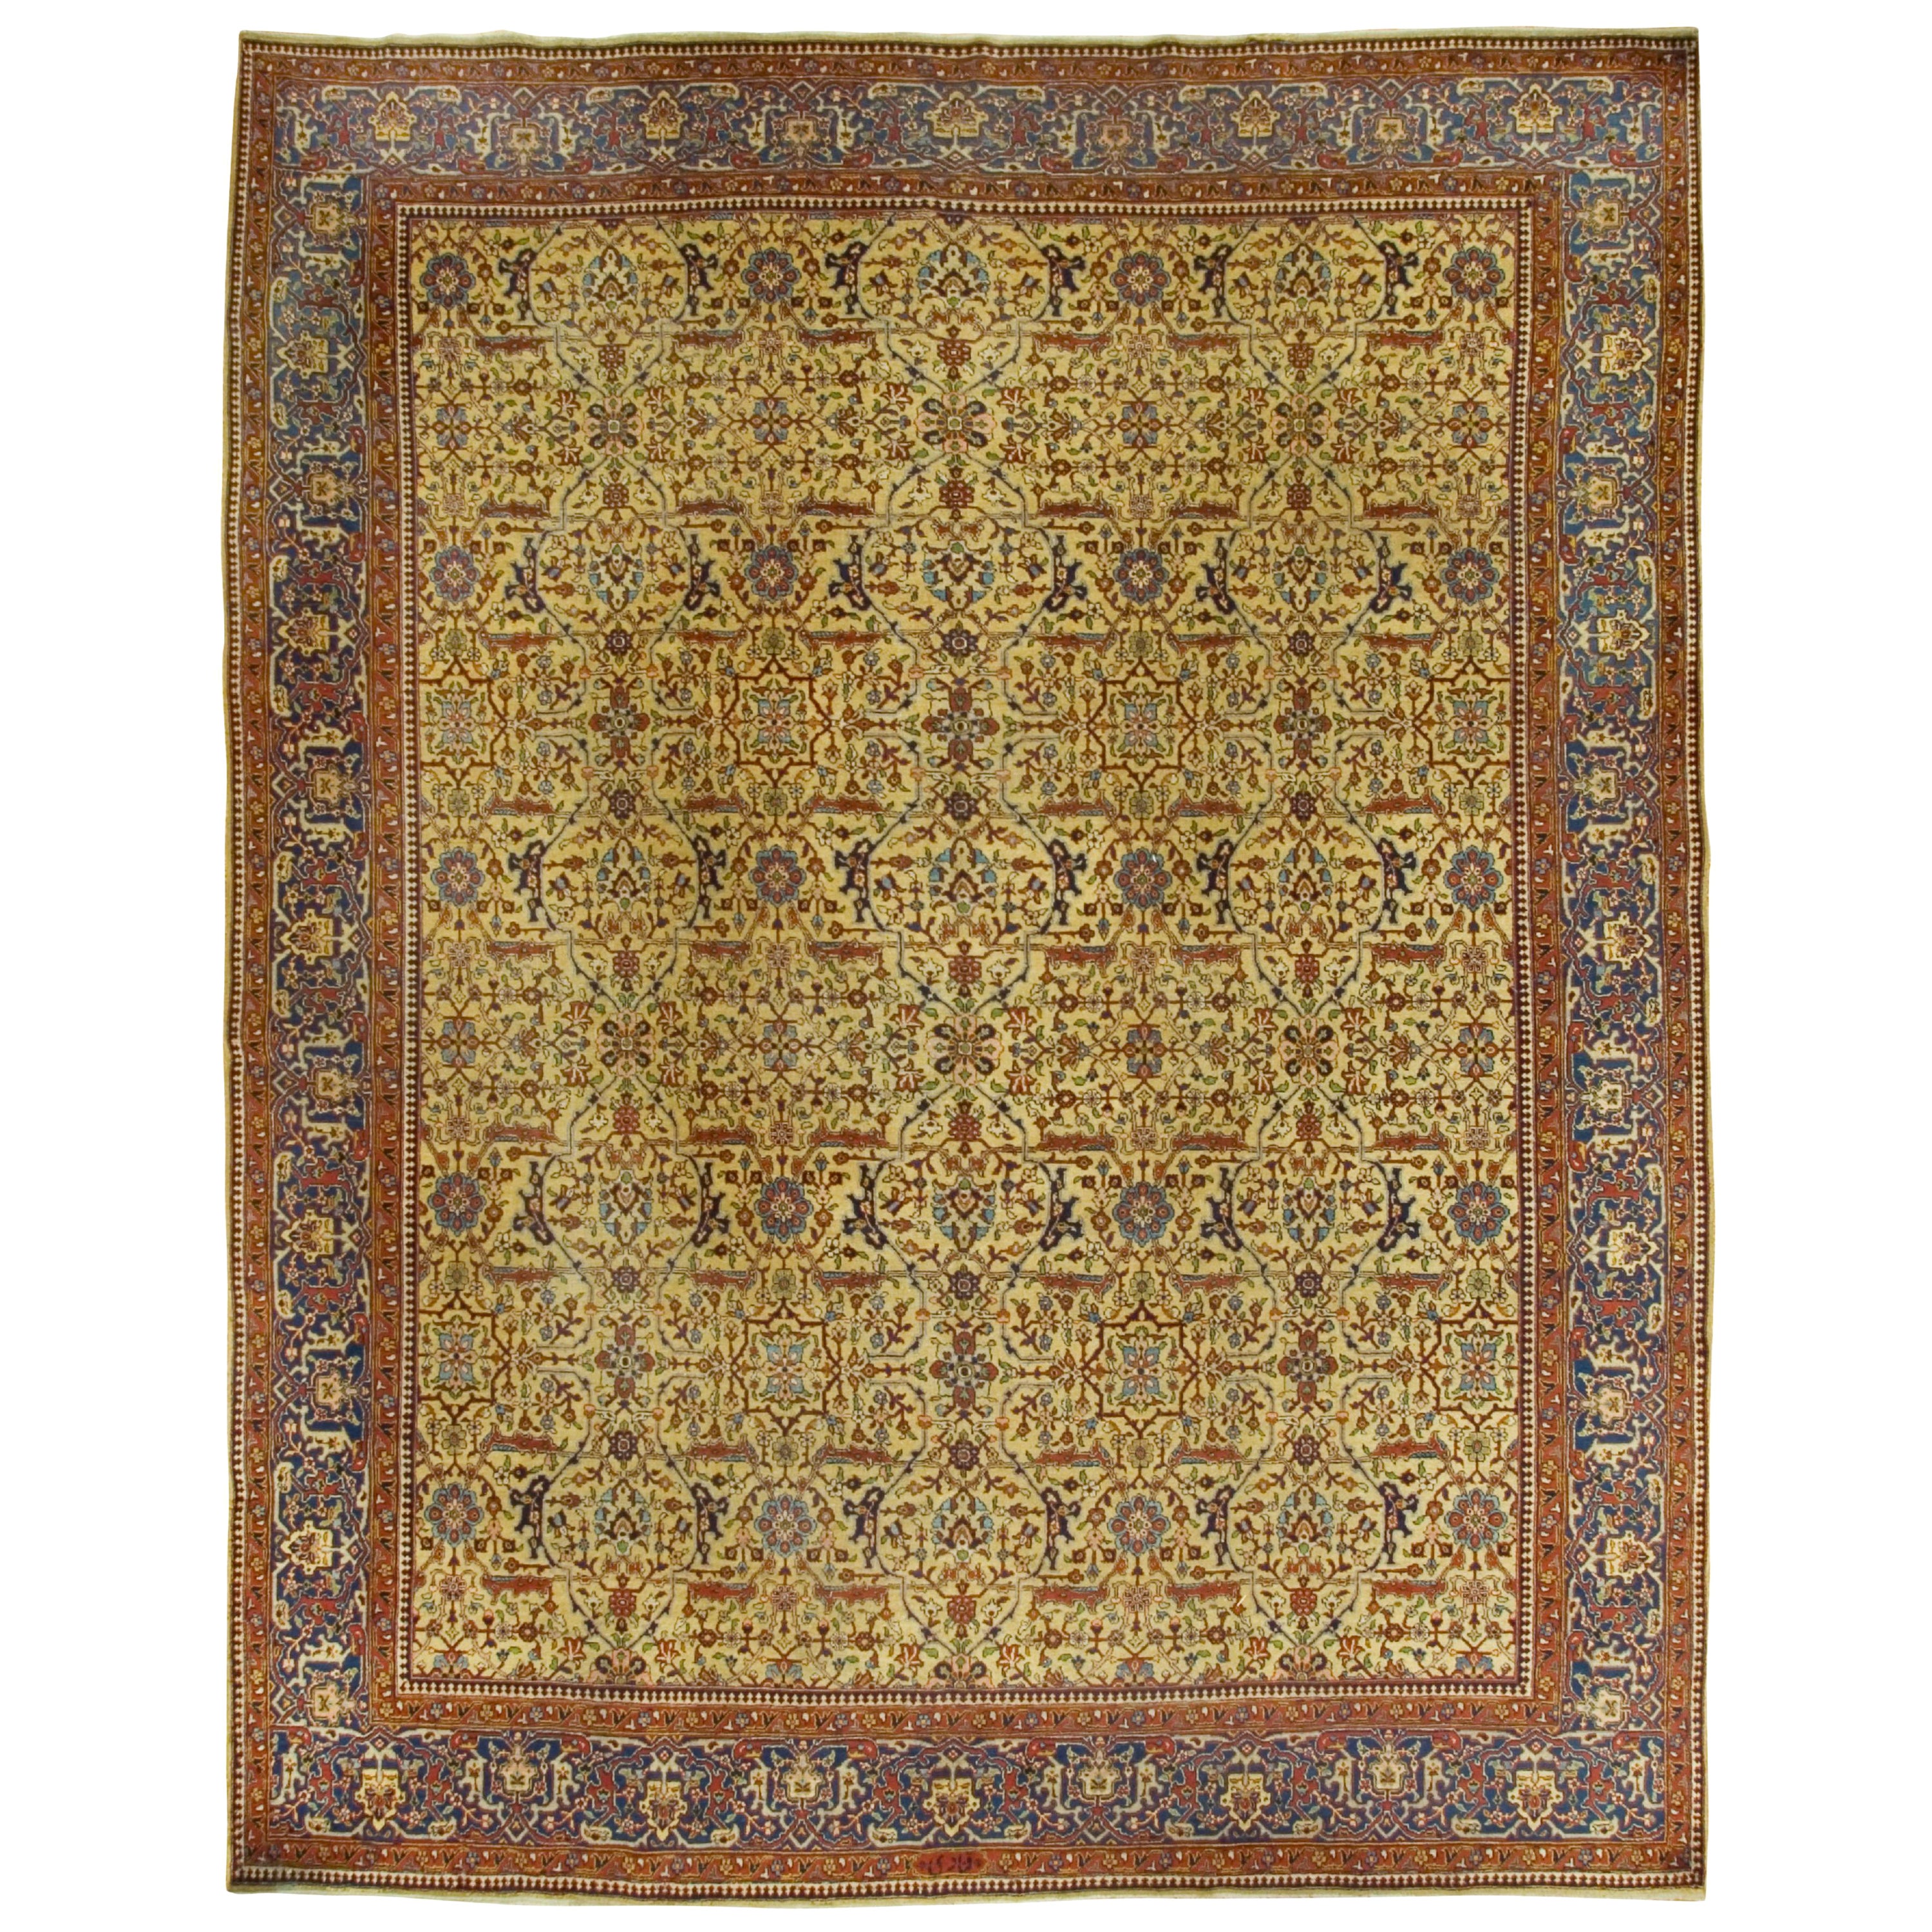 Antique Persian Tabriz Rug  10' x 12'6